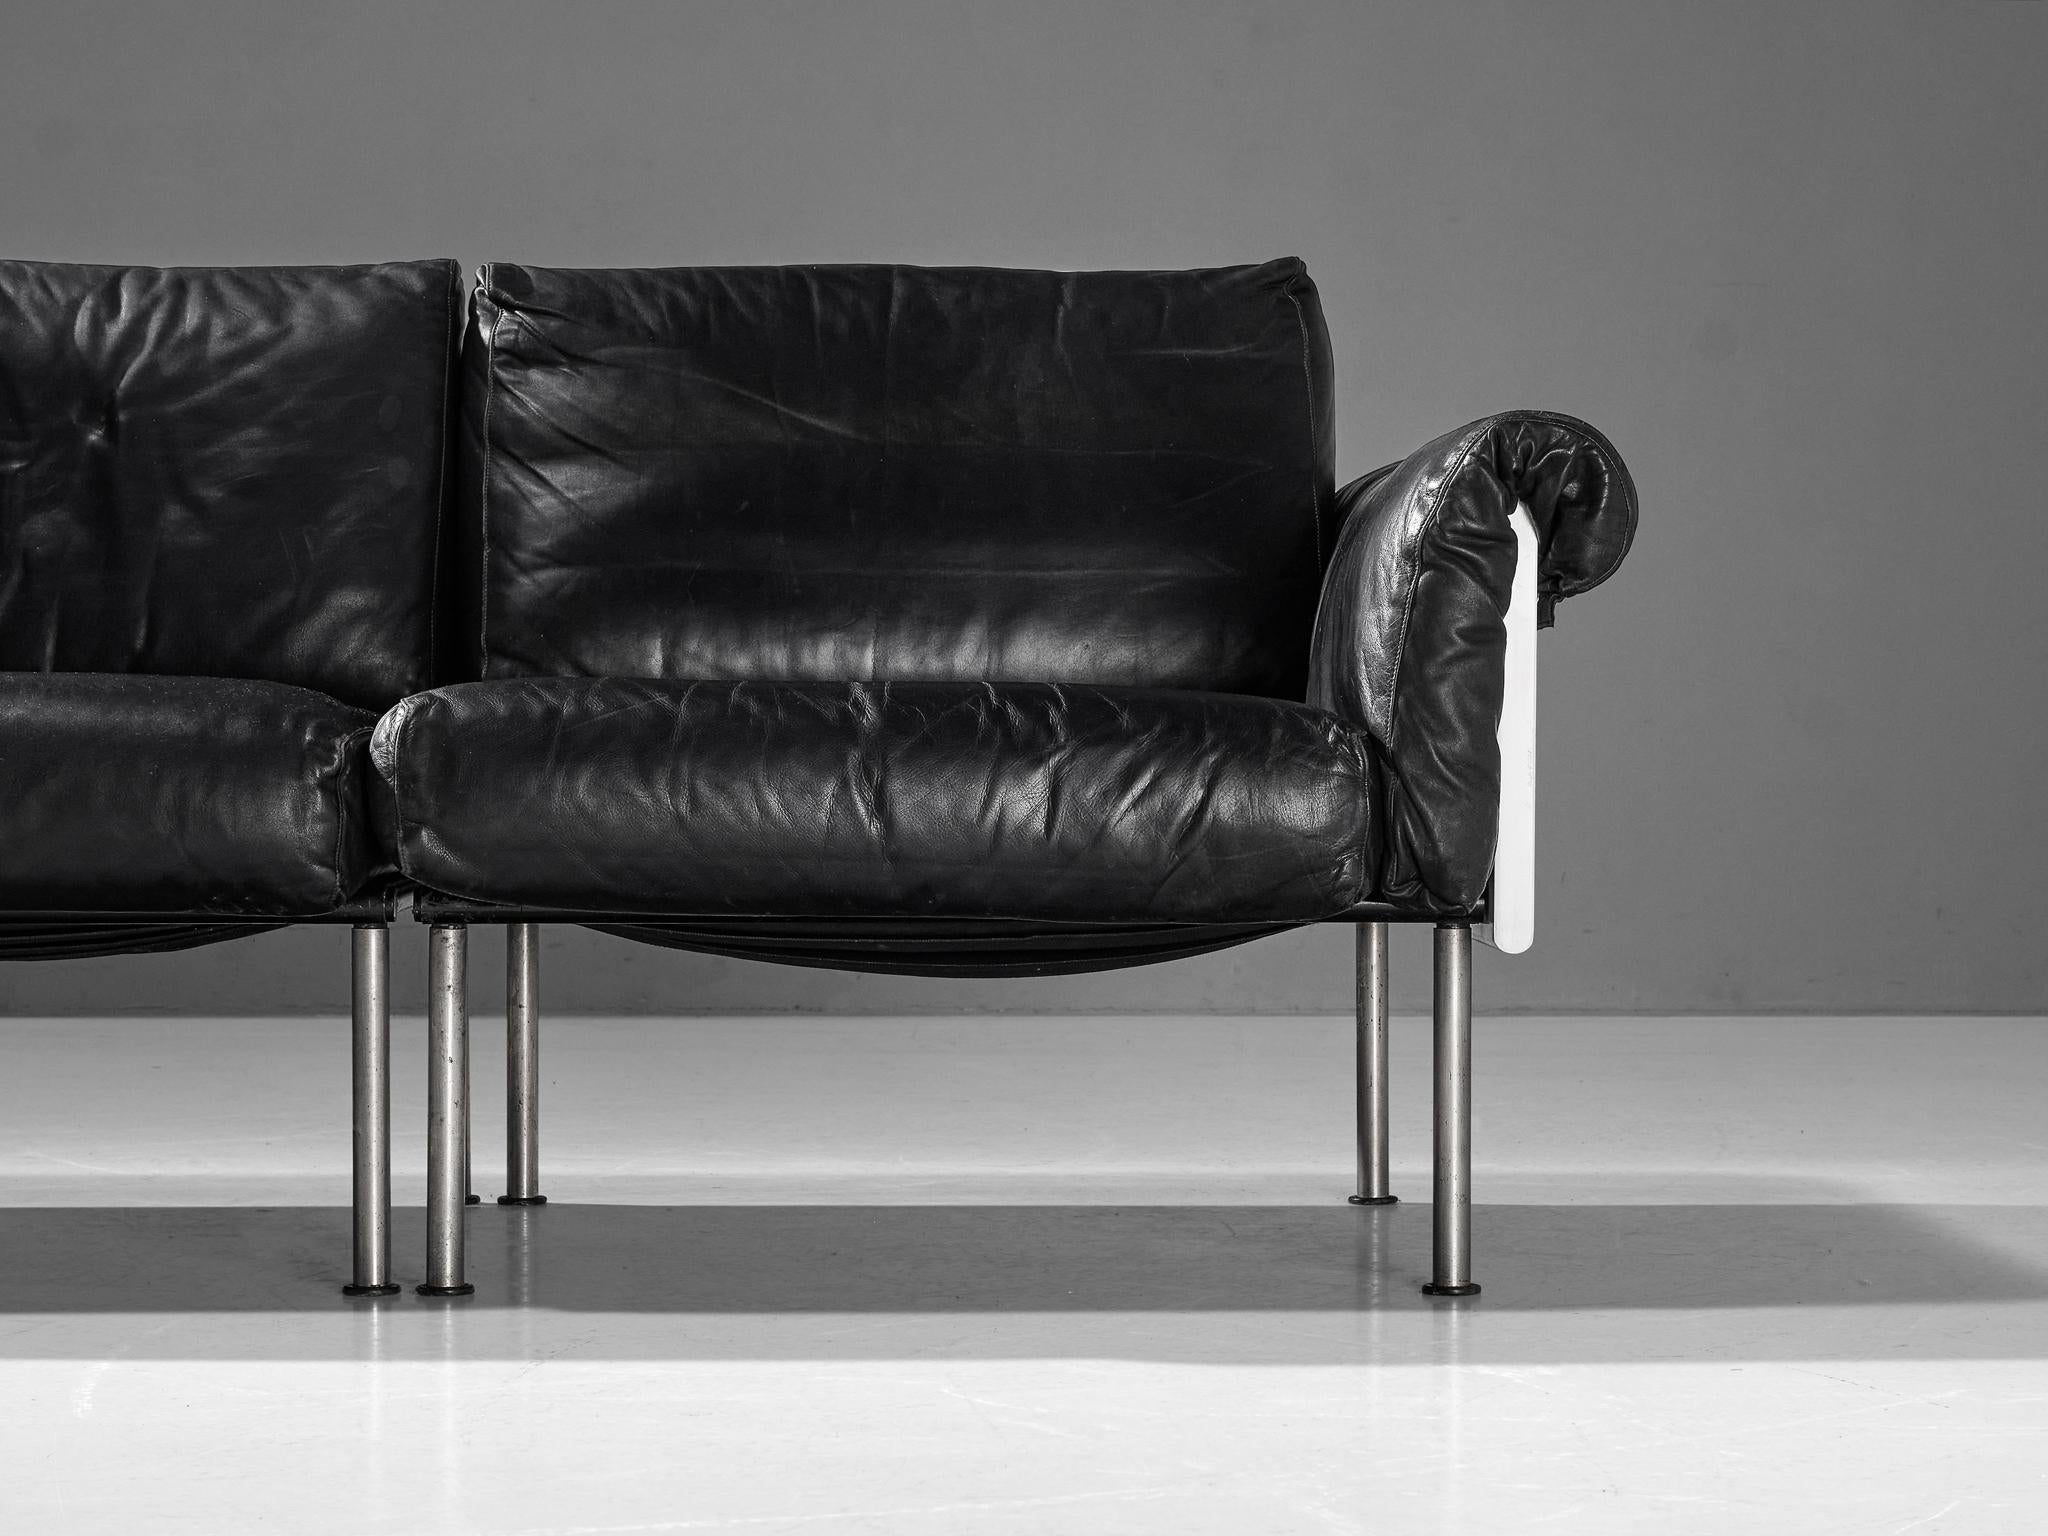 Yrjö Kukkapuro for Haimi 'Ateljee' Sectional Sofa in Black Leather  For Sale 2